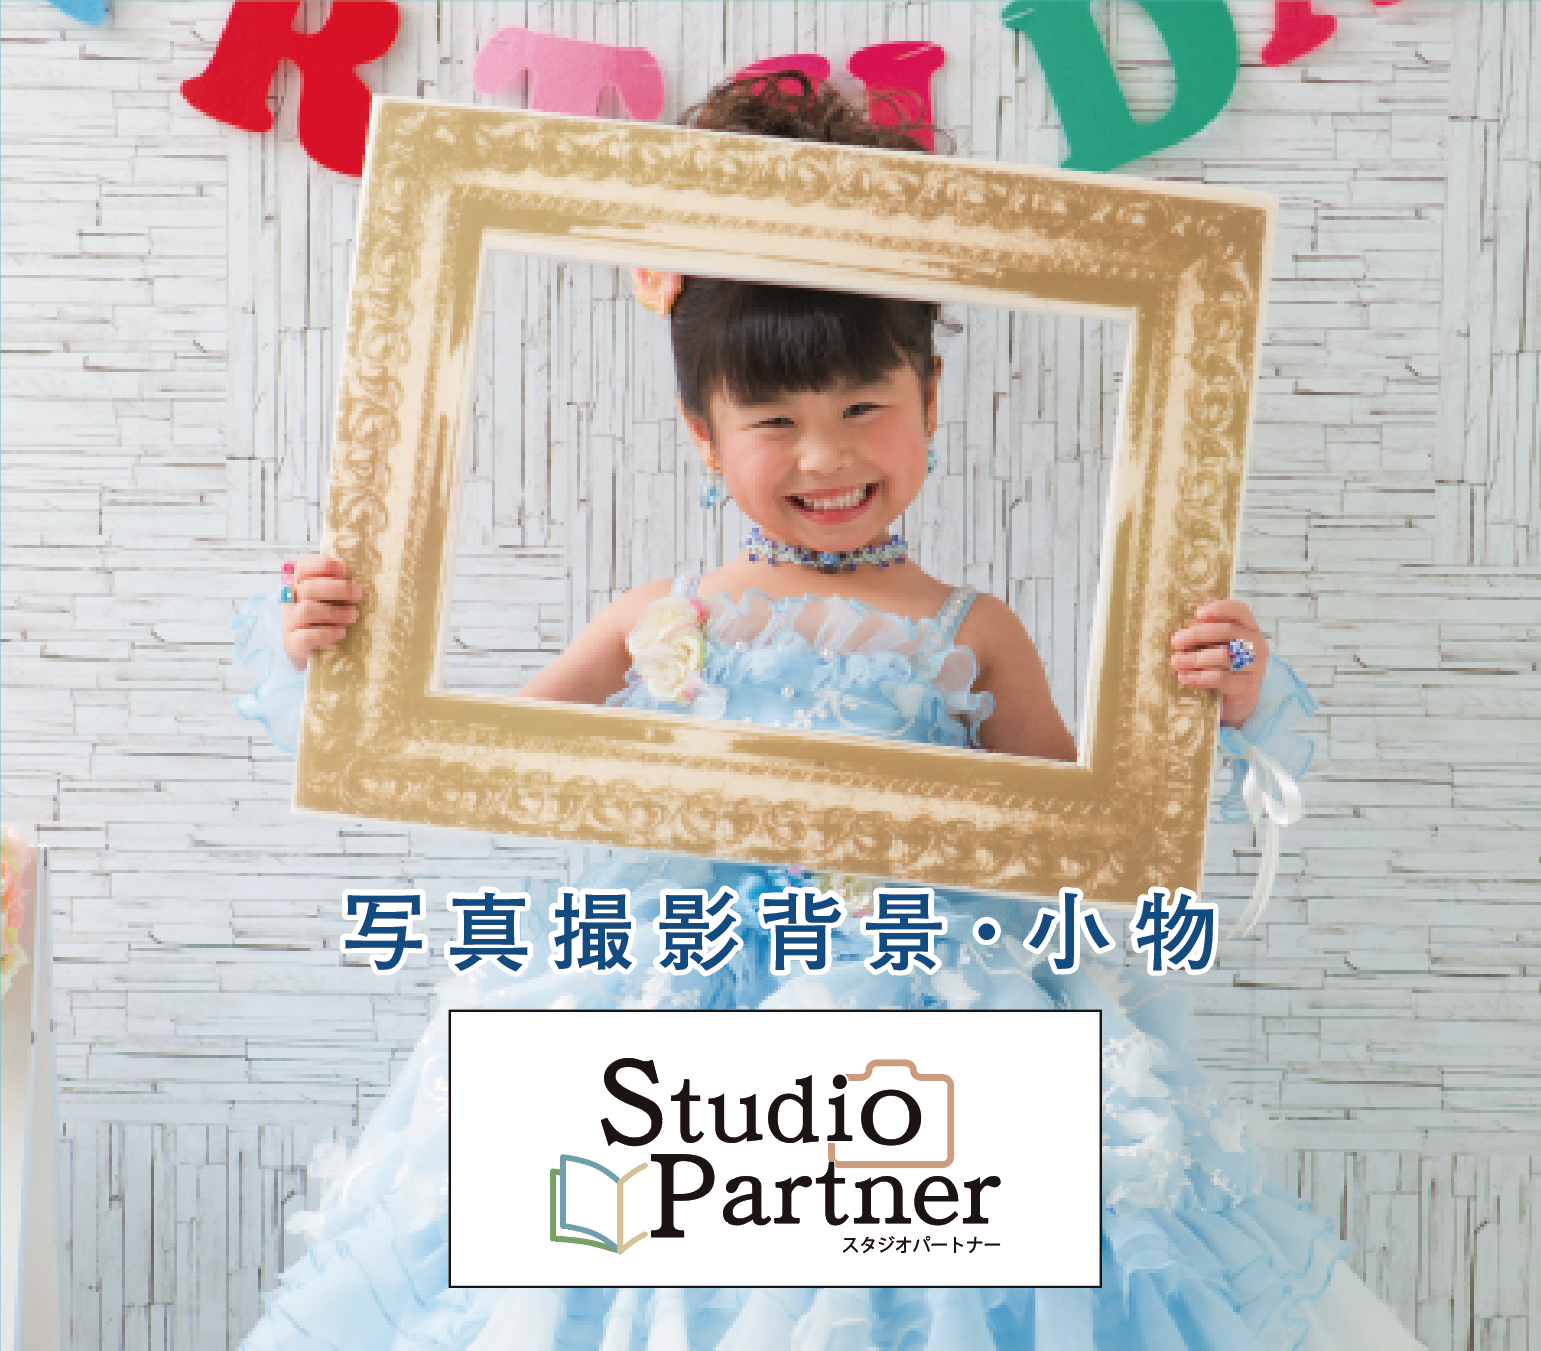 http://studio-partner.jp/